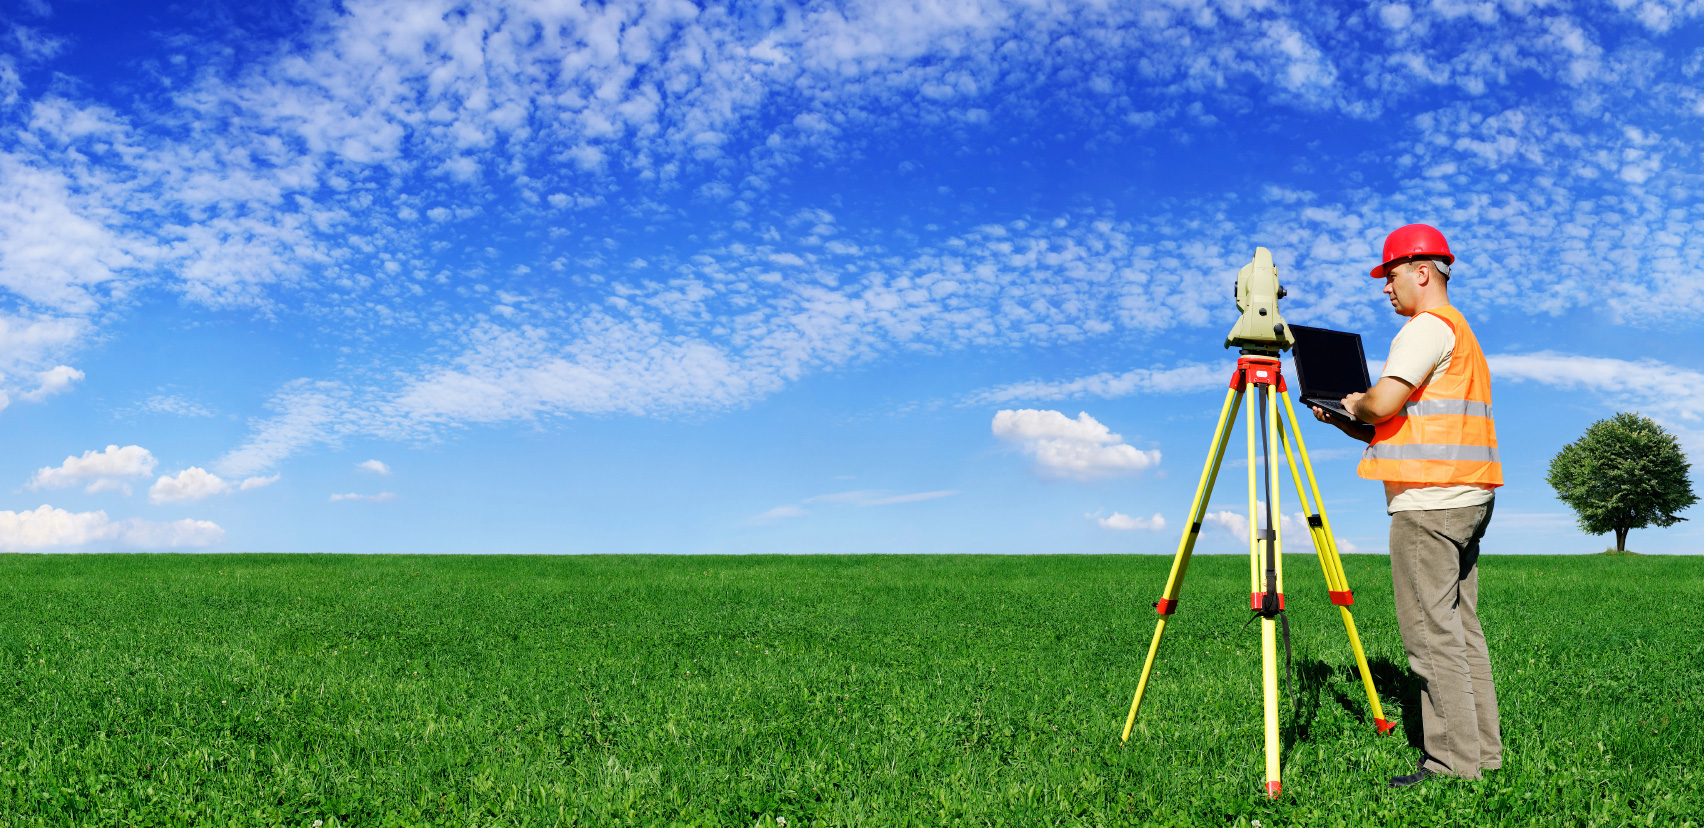 How to become a land surveyor?